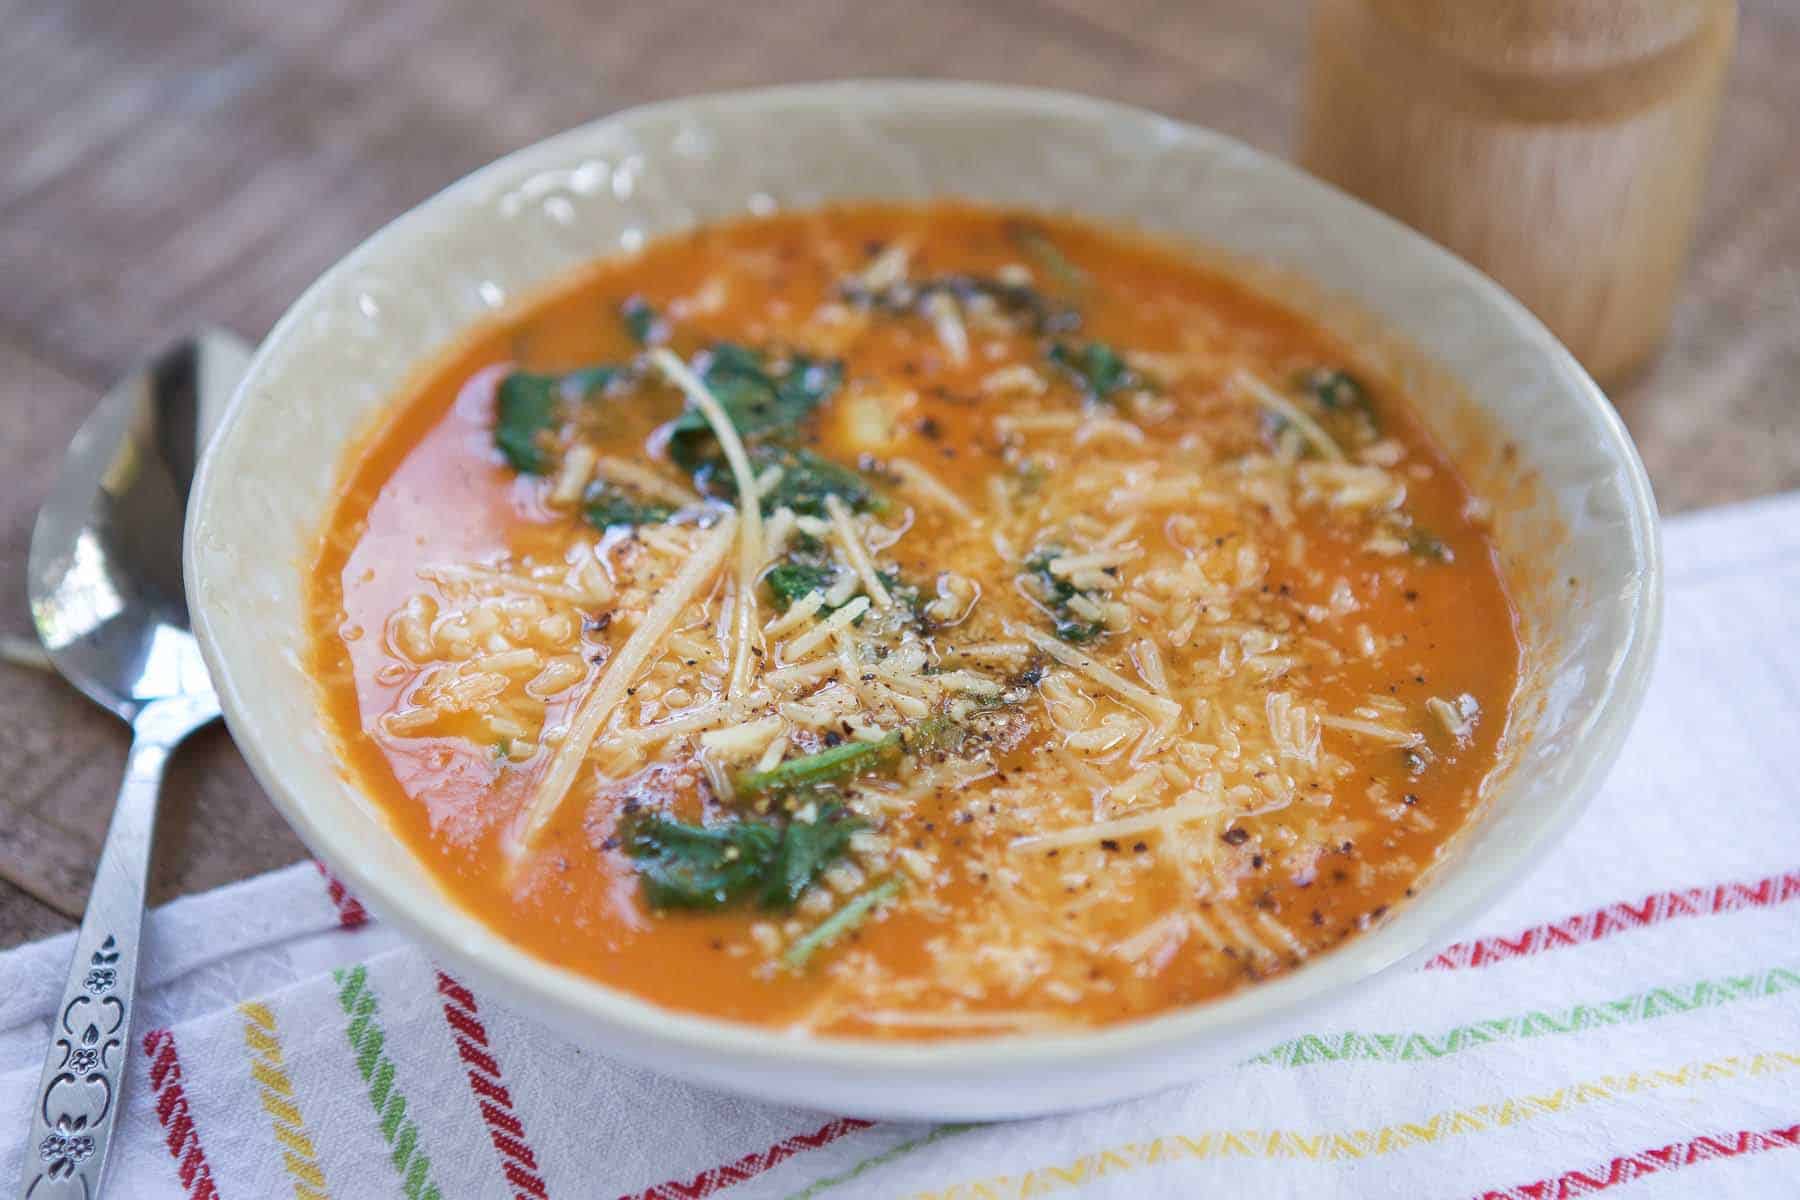 https://aggieskitchen.com/wp-content/uploads/2018/11/Tomato-Spinach-Tortellini-Soup-Skinnytaste.jpg